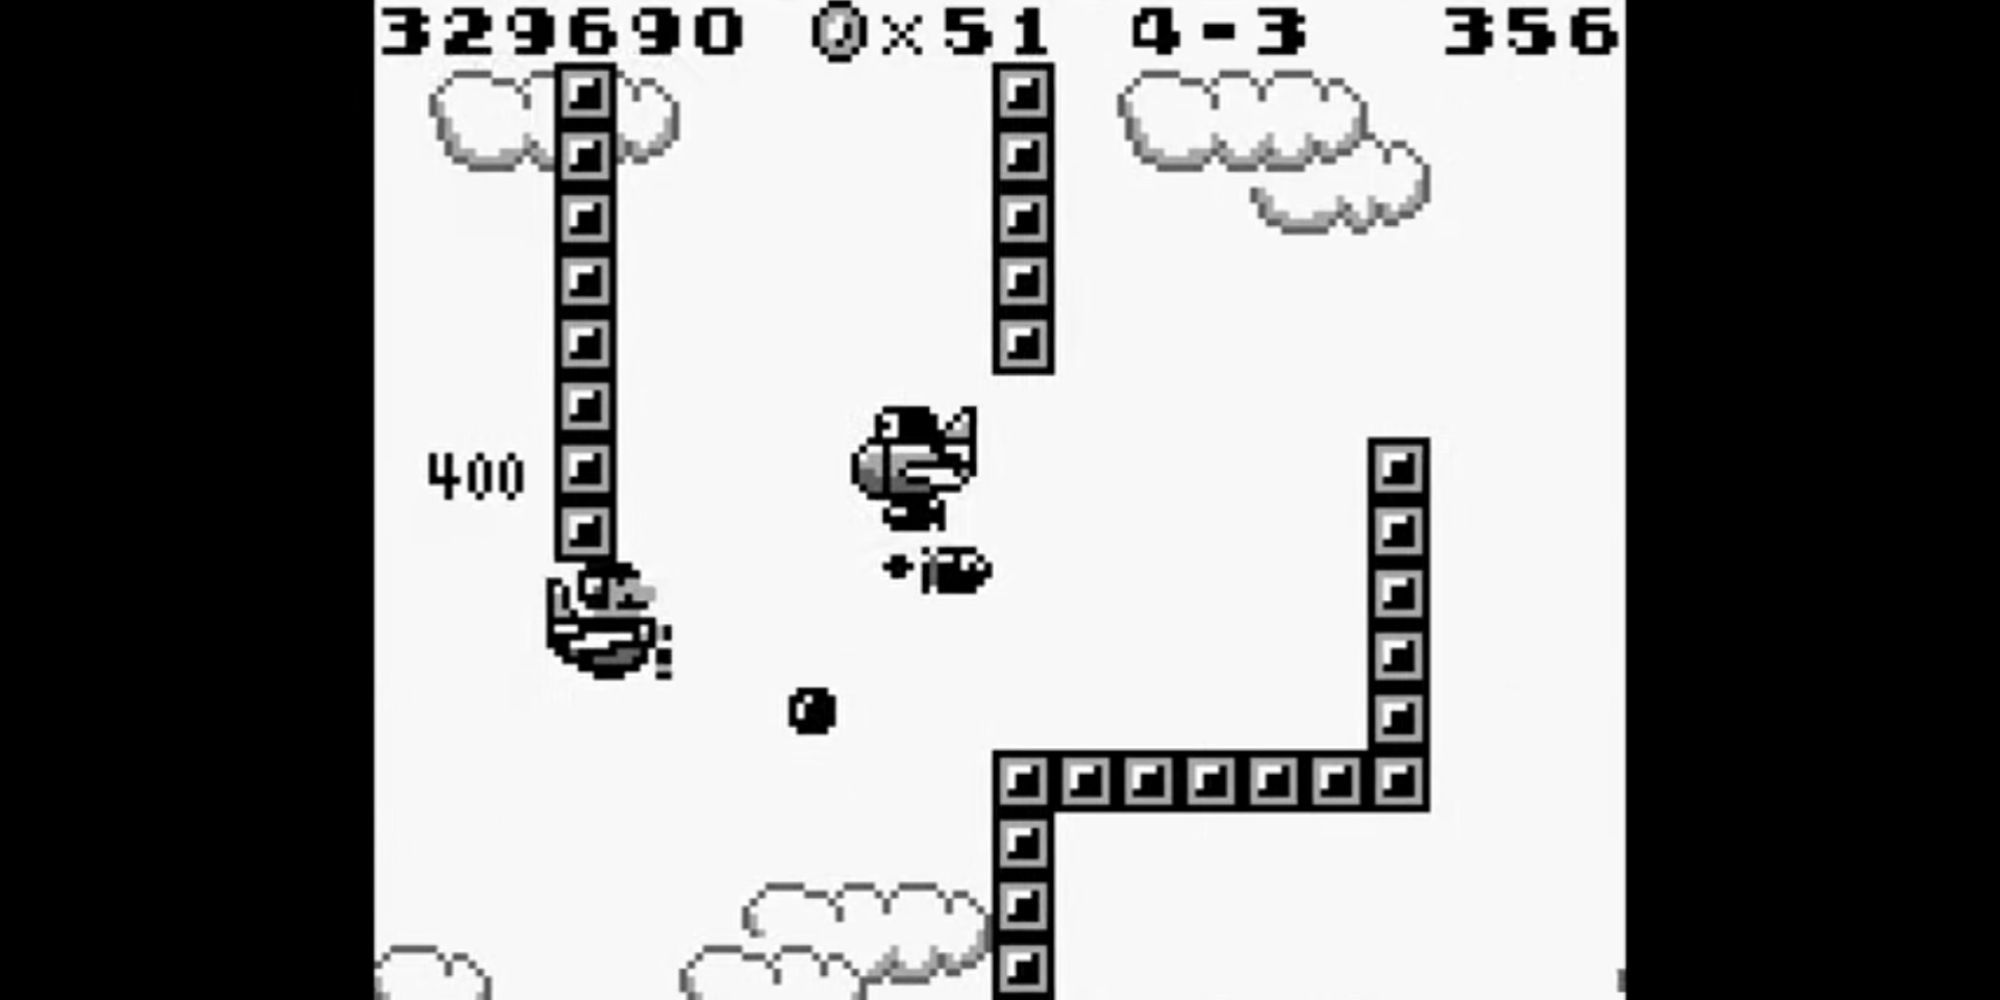  Mario flies a plane toward an enemy in the sky in Super Mario Land